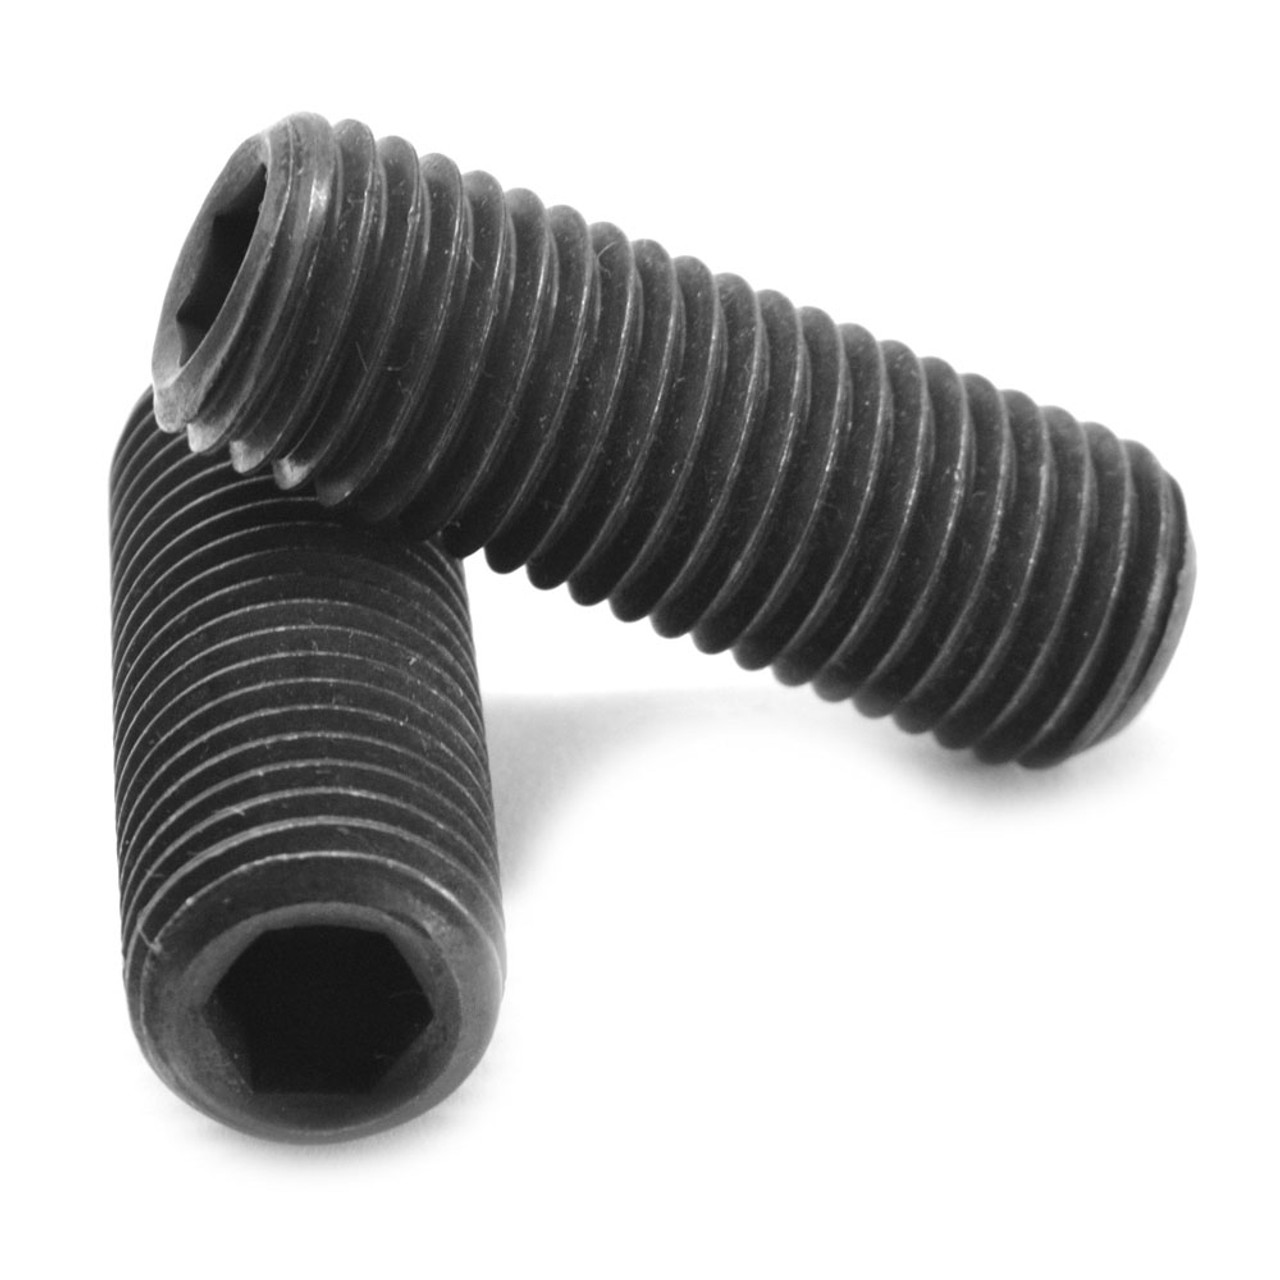 1/4"-20 x 1" BSW Thread BS2470 Socket Set Screw Cup Point Alloy Steel Black Oxide